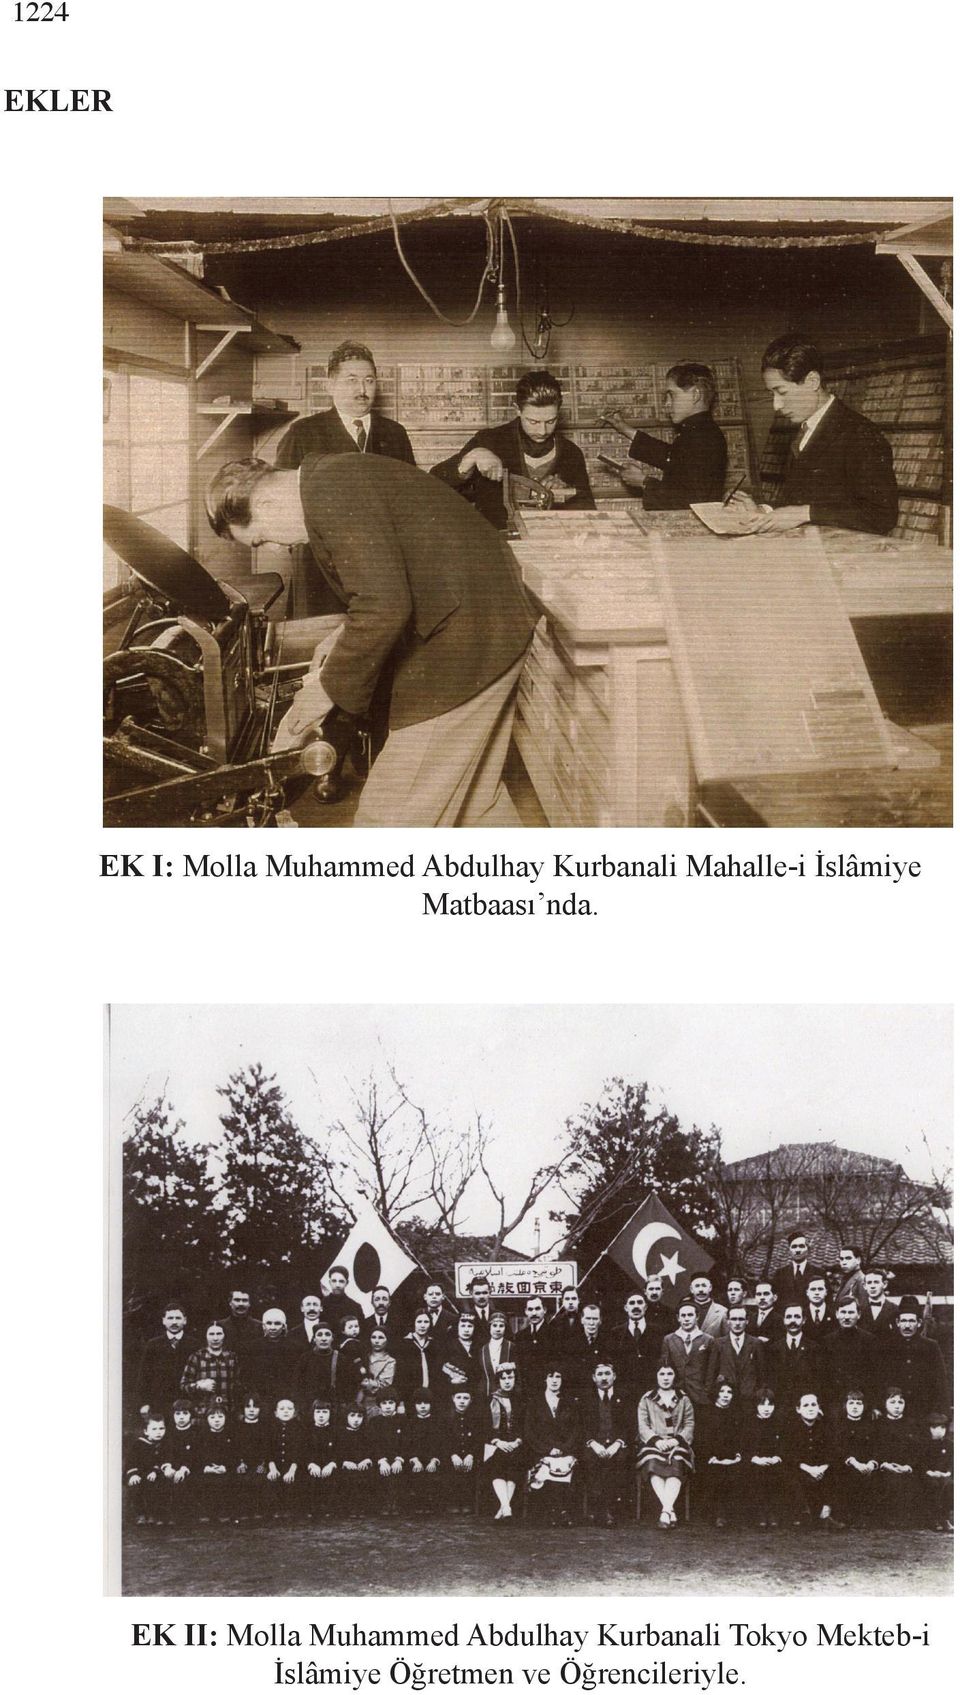 EK II: Molla Muhammed Abdulhay Kurbanali